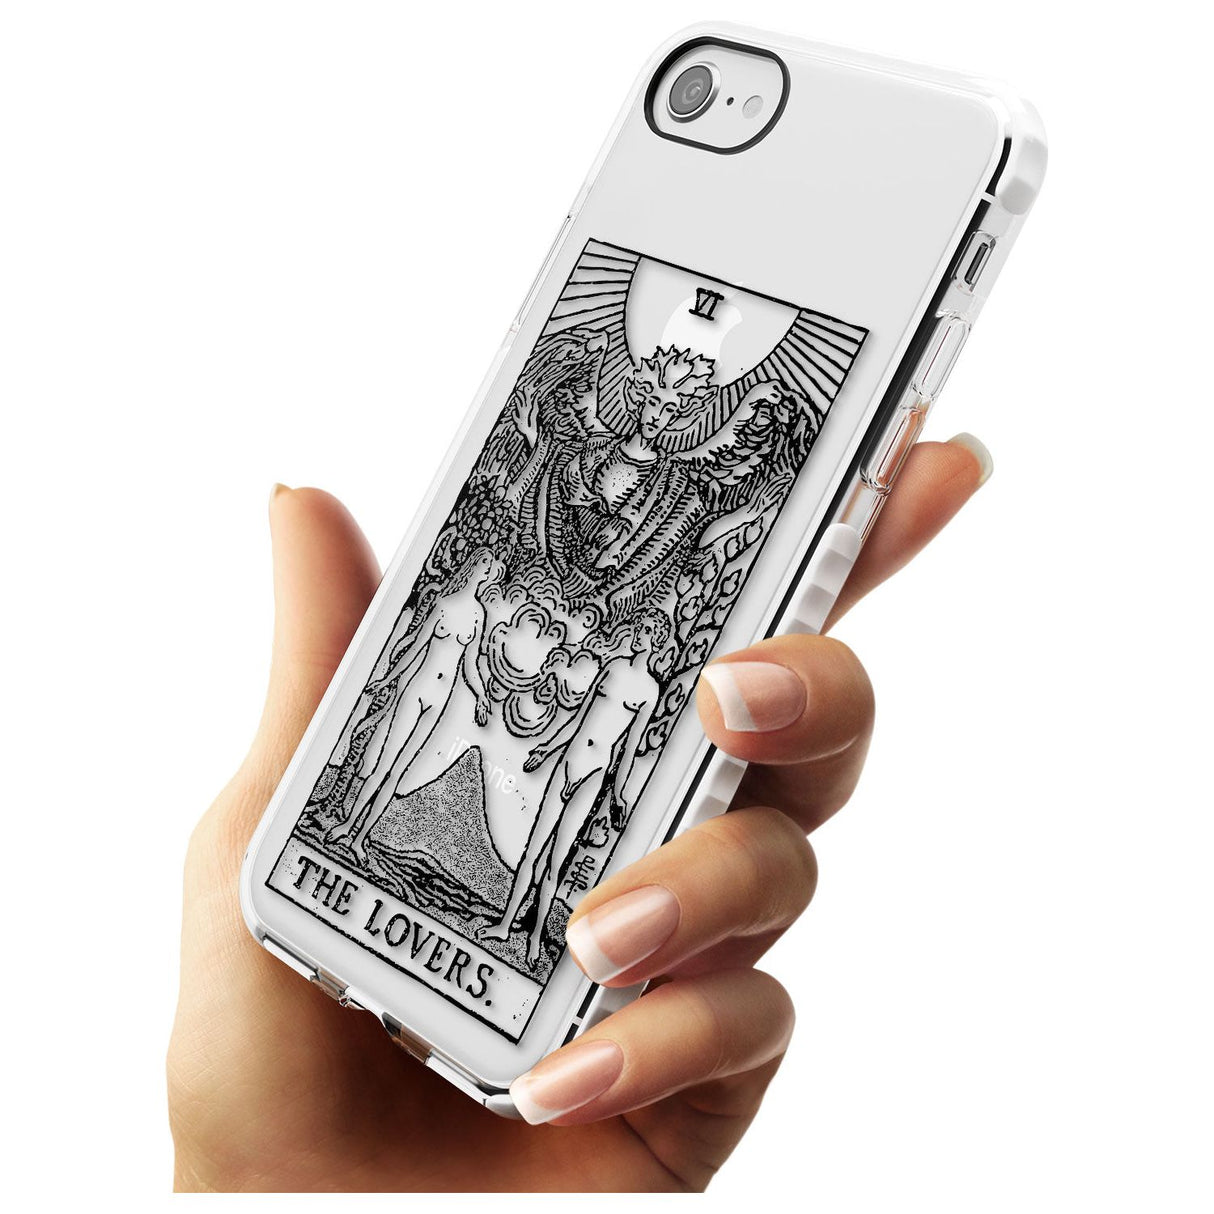 The Lovers Tarot Card - Transparent Slim TPU Phone Case for iPhone SE 8 7 Plus